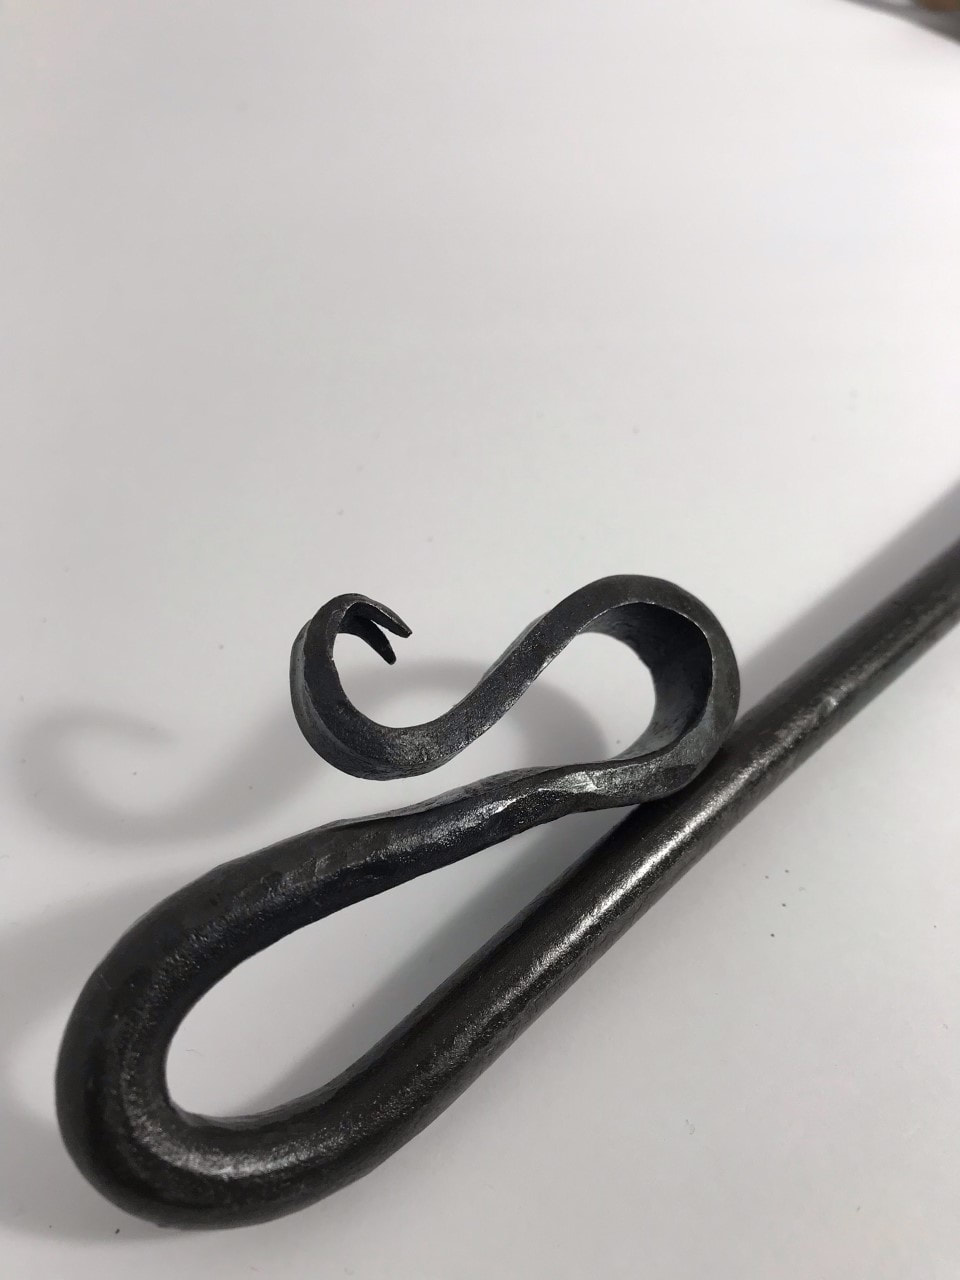 Blacksmith forged fire poker snake handle detail